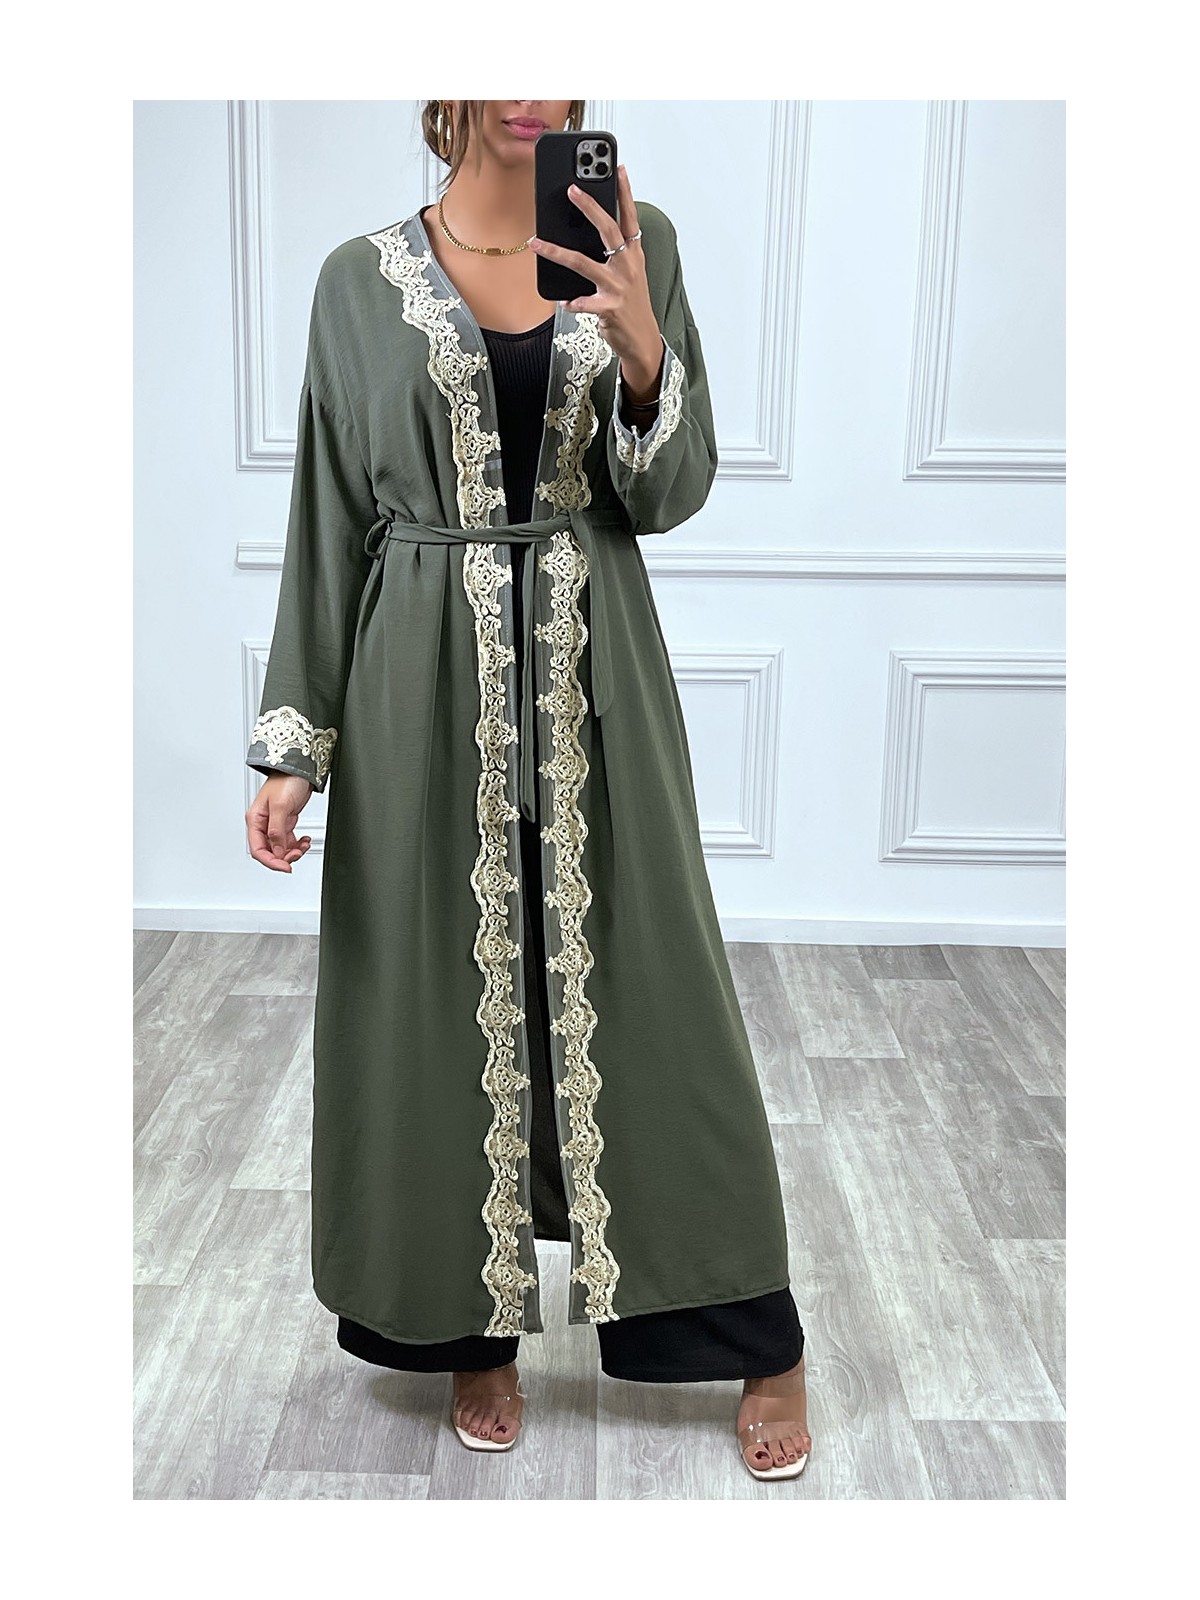 KiLKno long ceinturé style abaya kaki avec broderie doré - 2